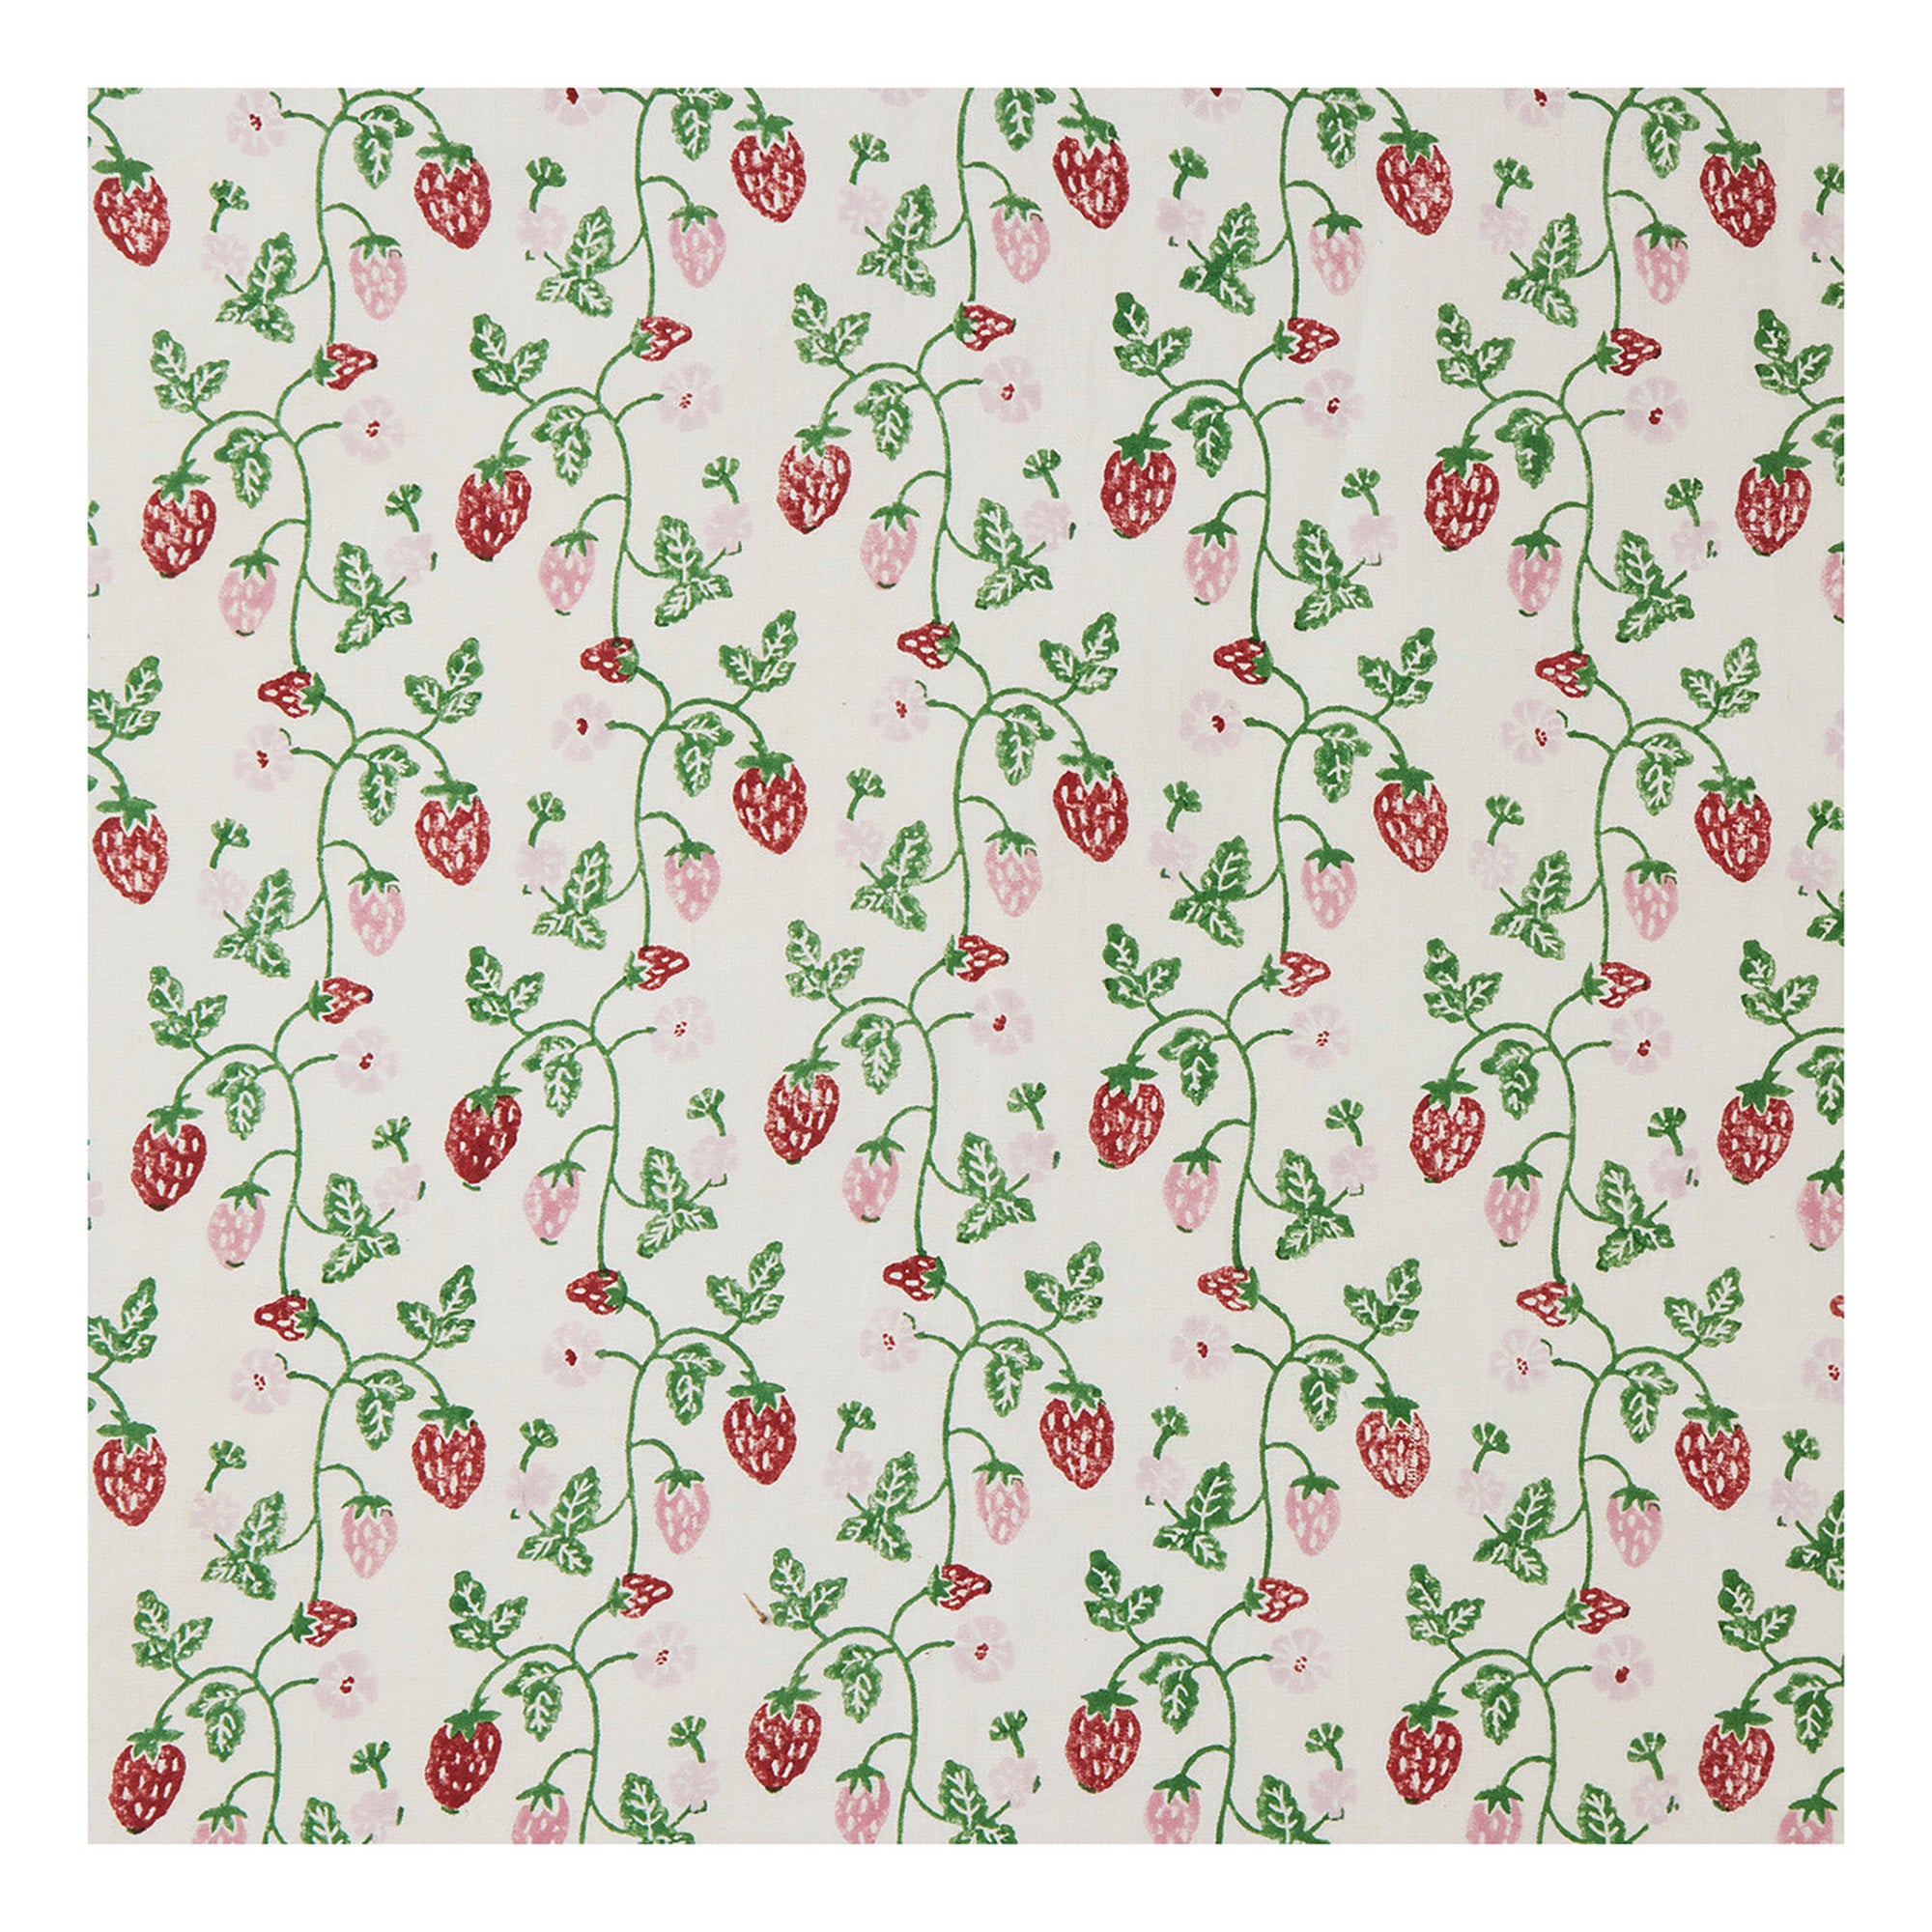 Strawberry Block printed Fabric Linen/Cotton Grass